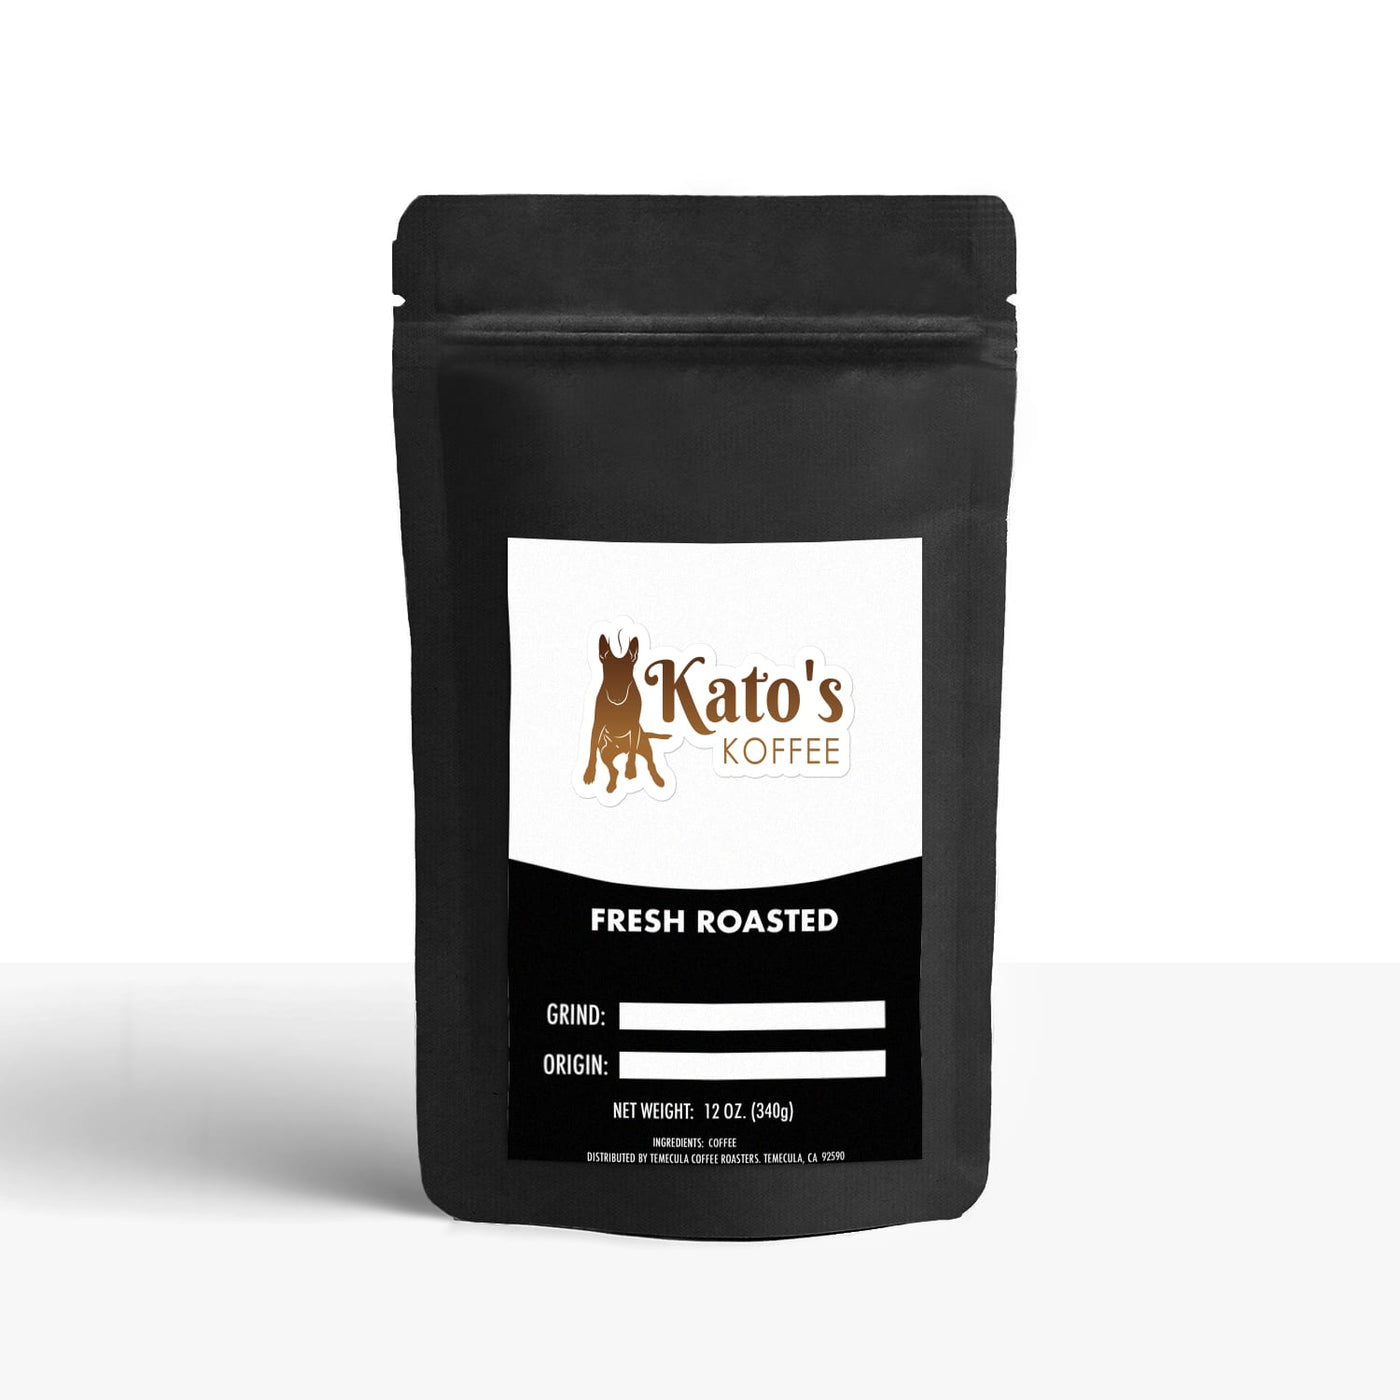 Cold Brew Coffee - Kato's Koffee